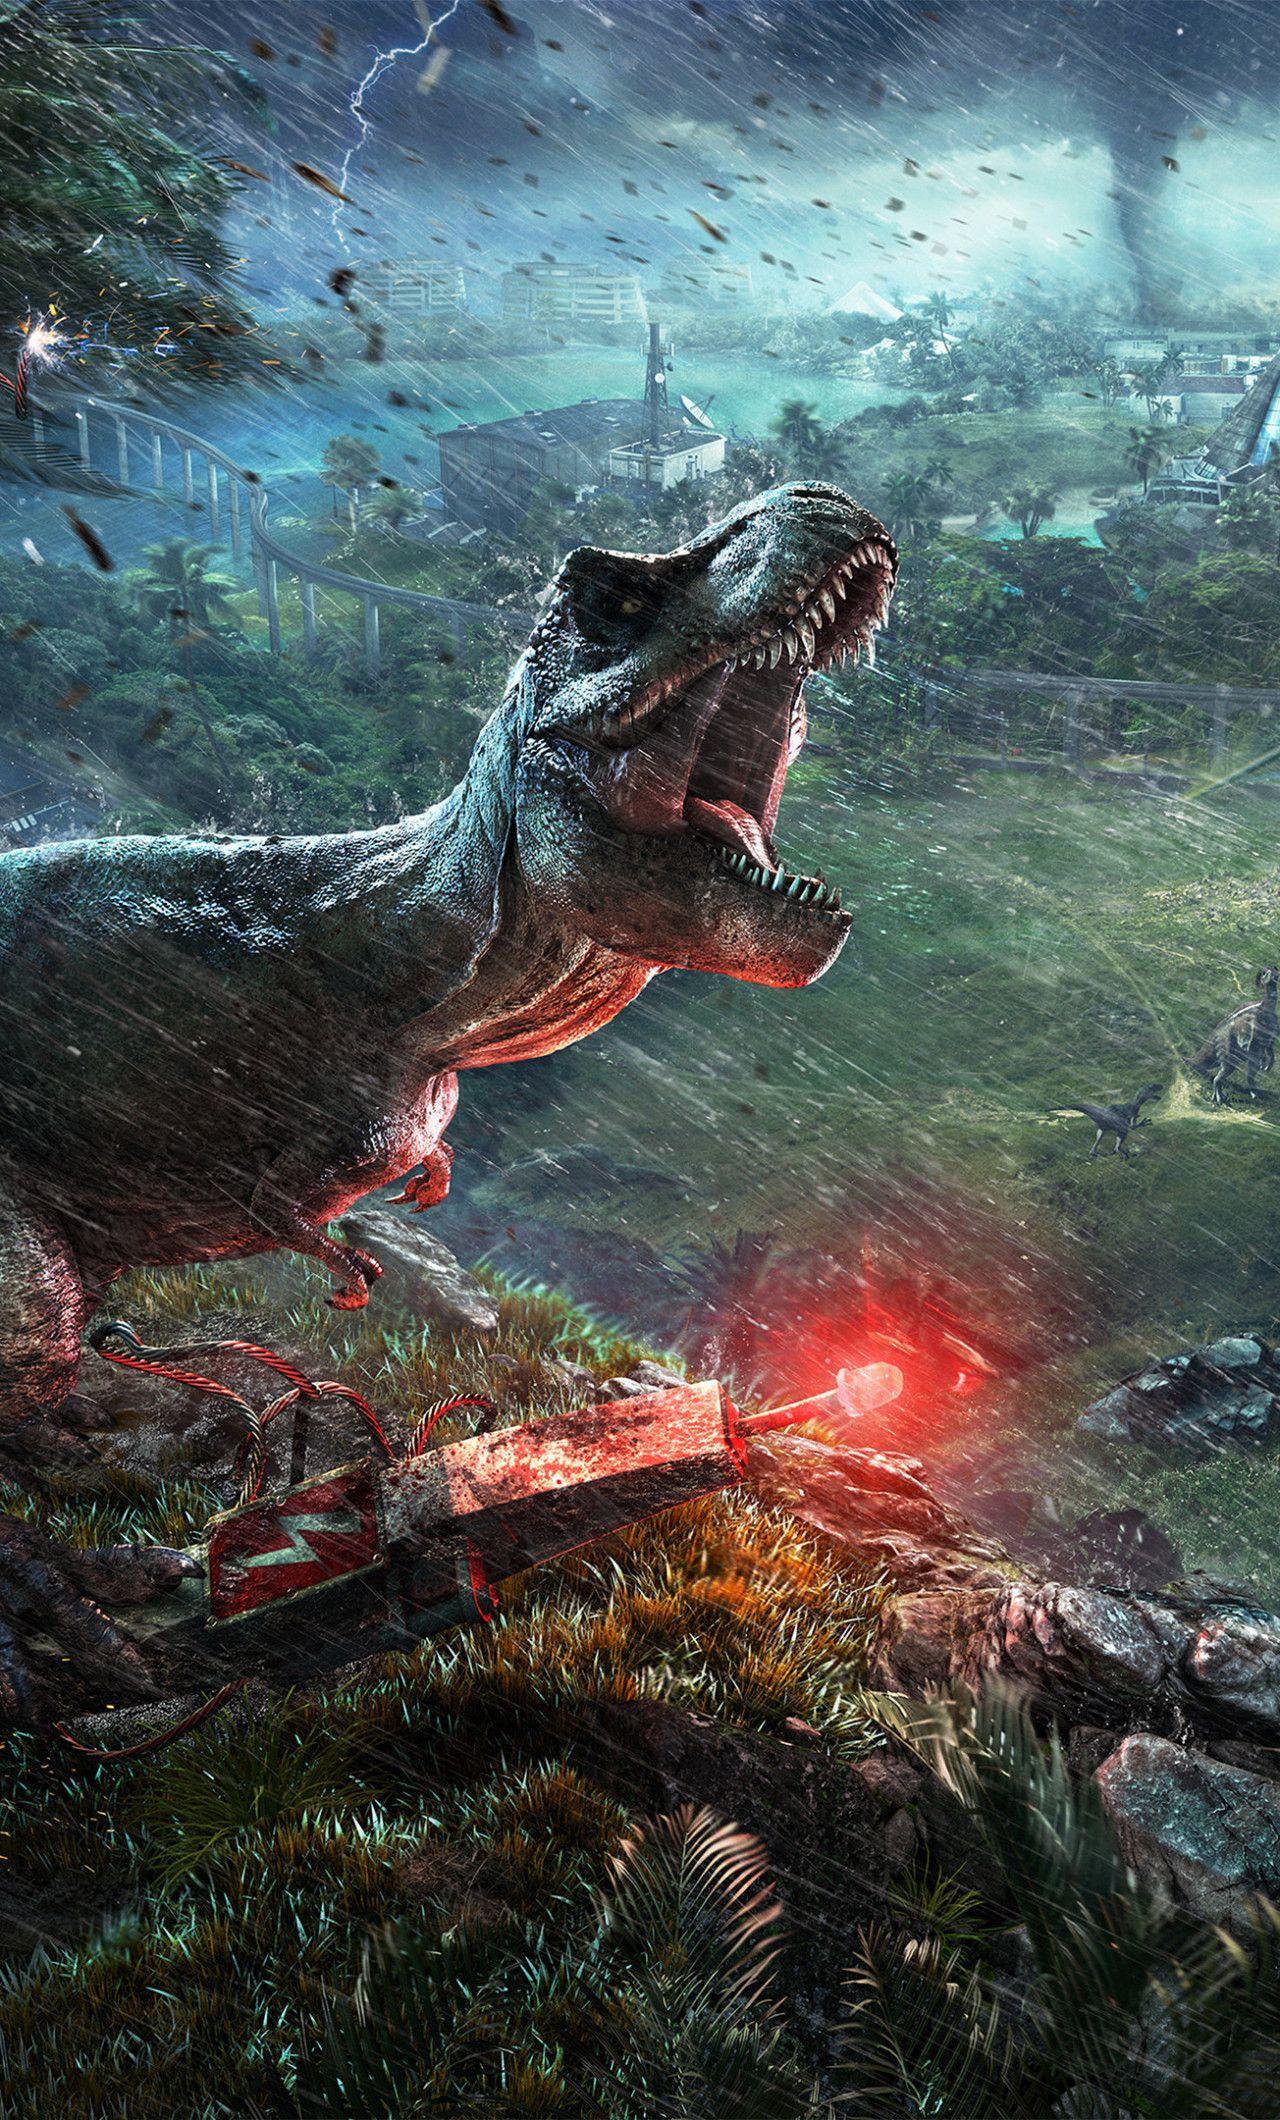 Jurassic Park 4K Wallpapers - Top Free Jurassic Park 4K Backgrounds